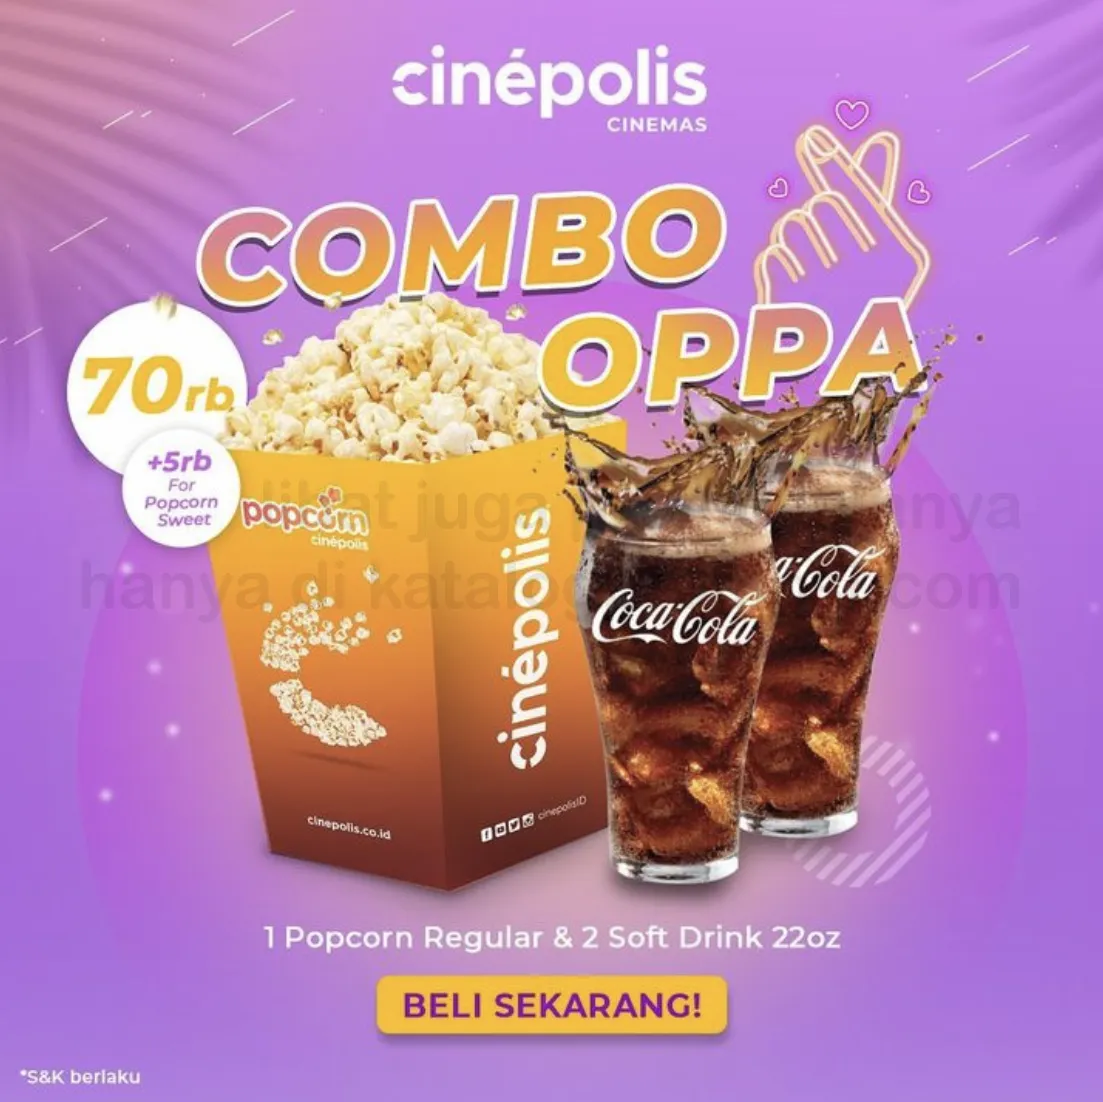 Promo CINEPOLIS COMBO OPPA - PAKET 1 Regular Popcorn Salty dan 2 Soft Drinks 22oz cuma Rp. 70RIBU